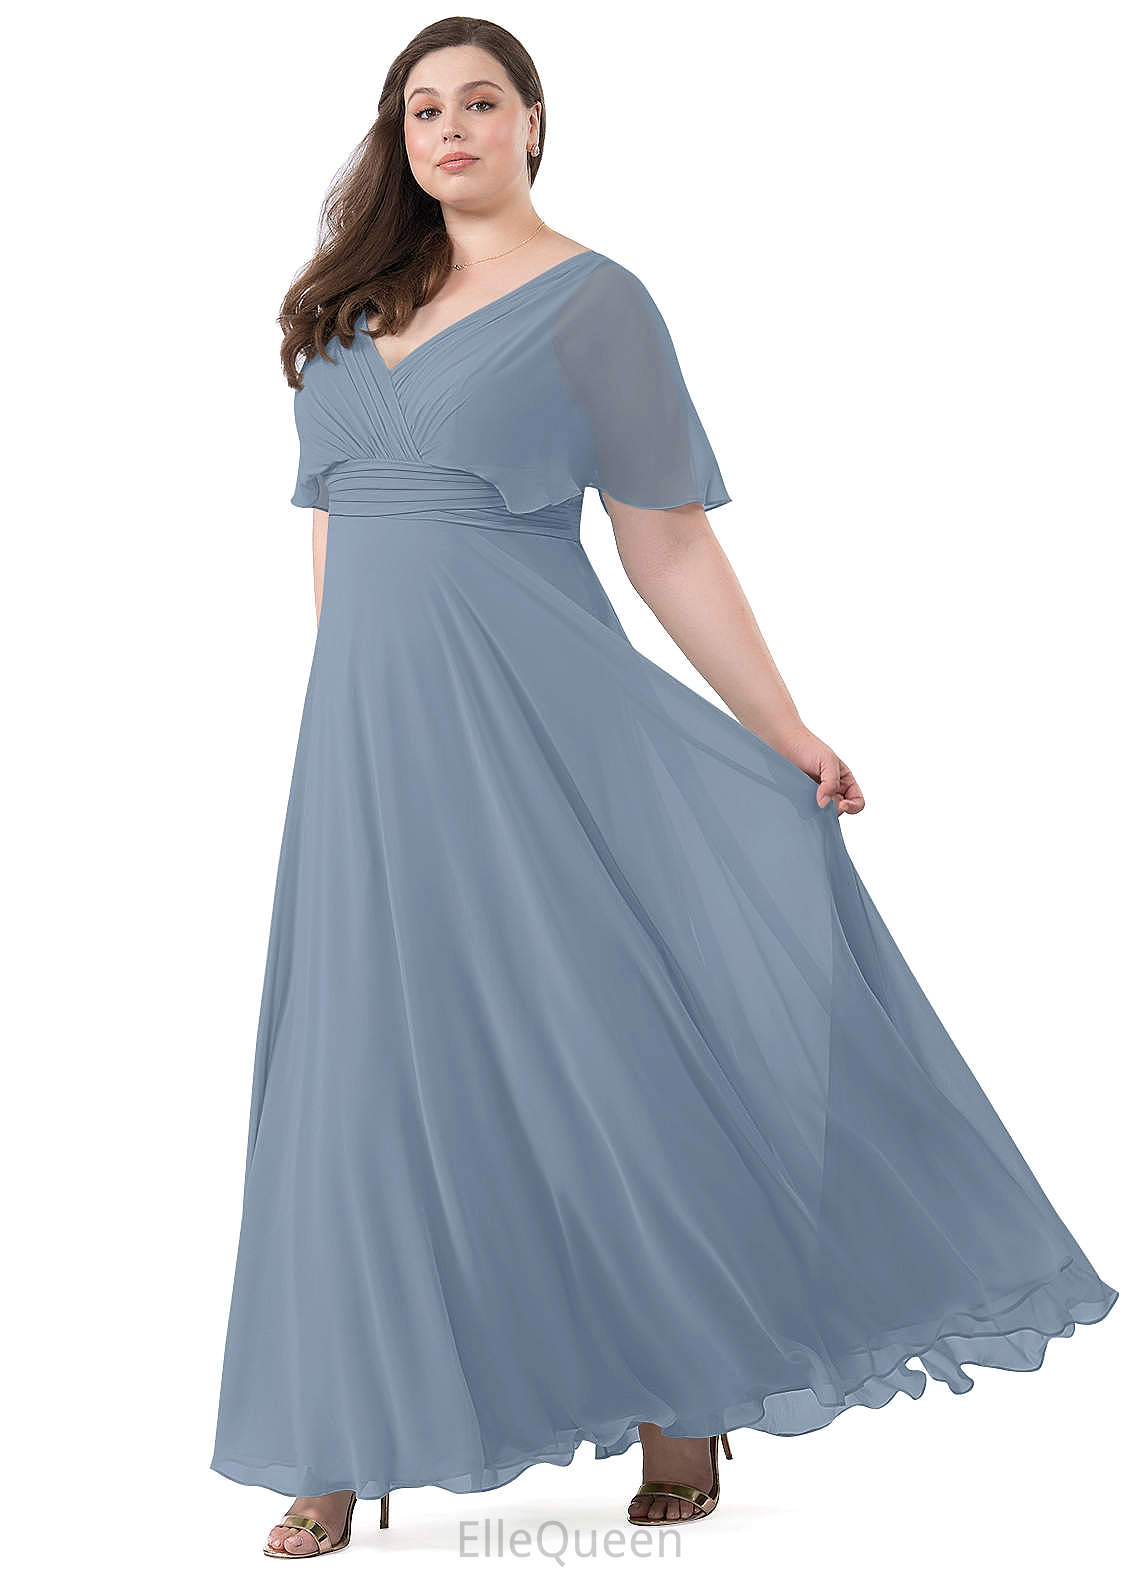 Angeline Floor Length Natural Waist A-Line/Princess Sleeveless V-Neck Bridesmaid Dresses